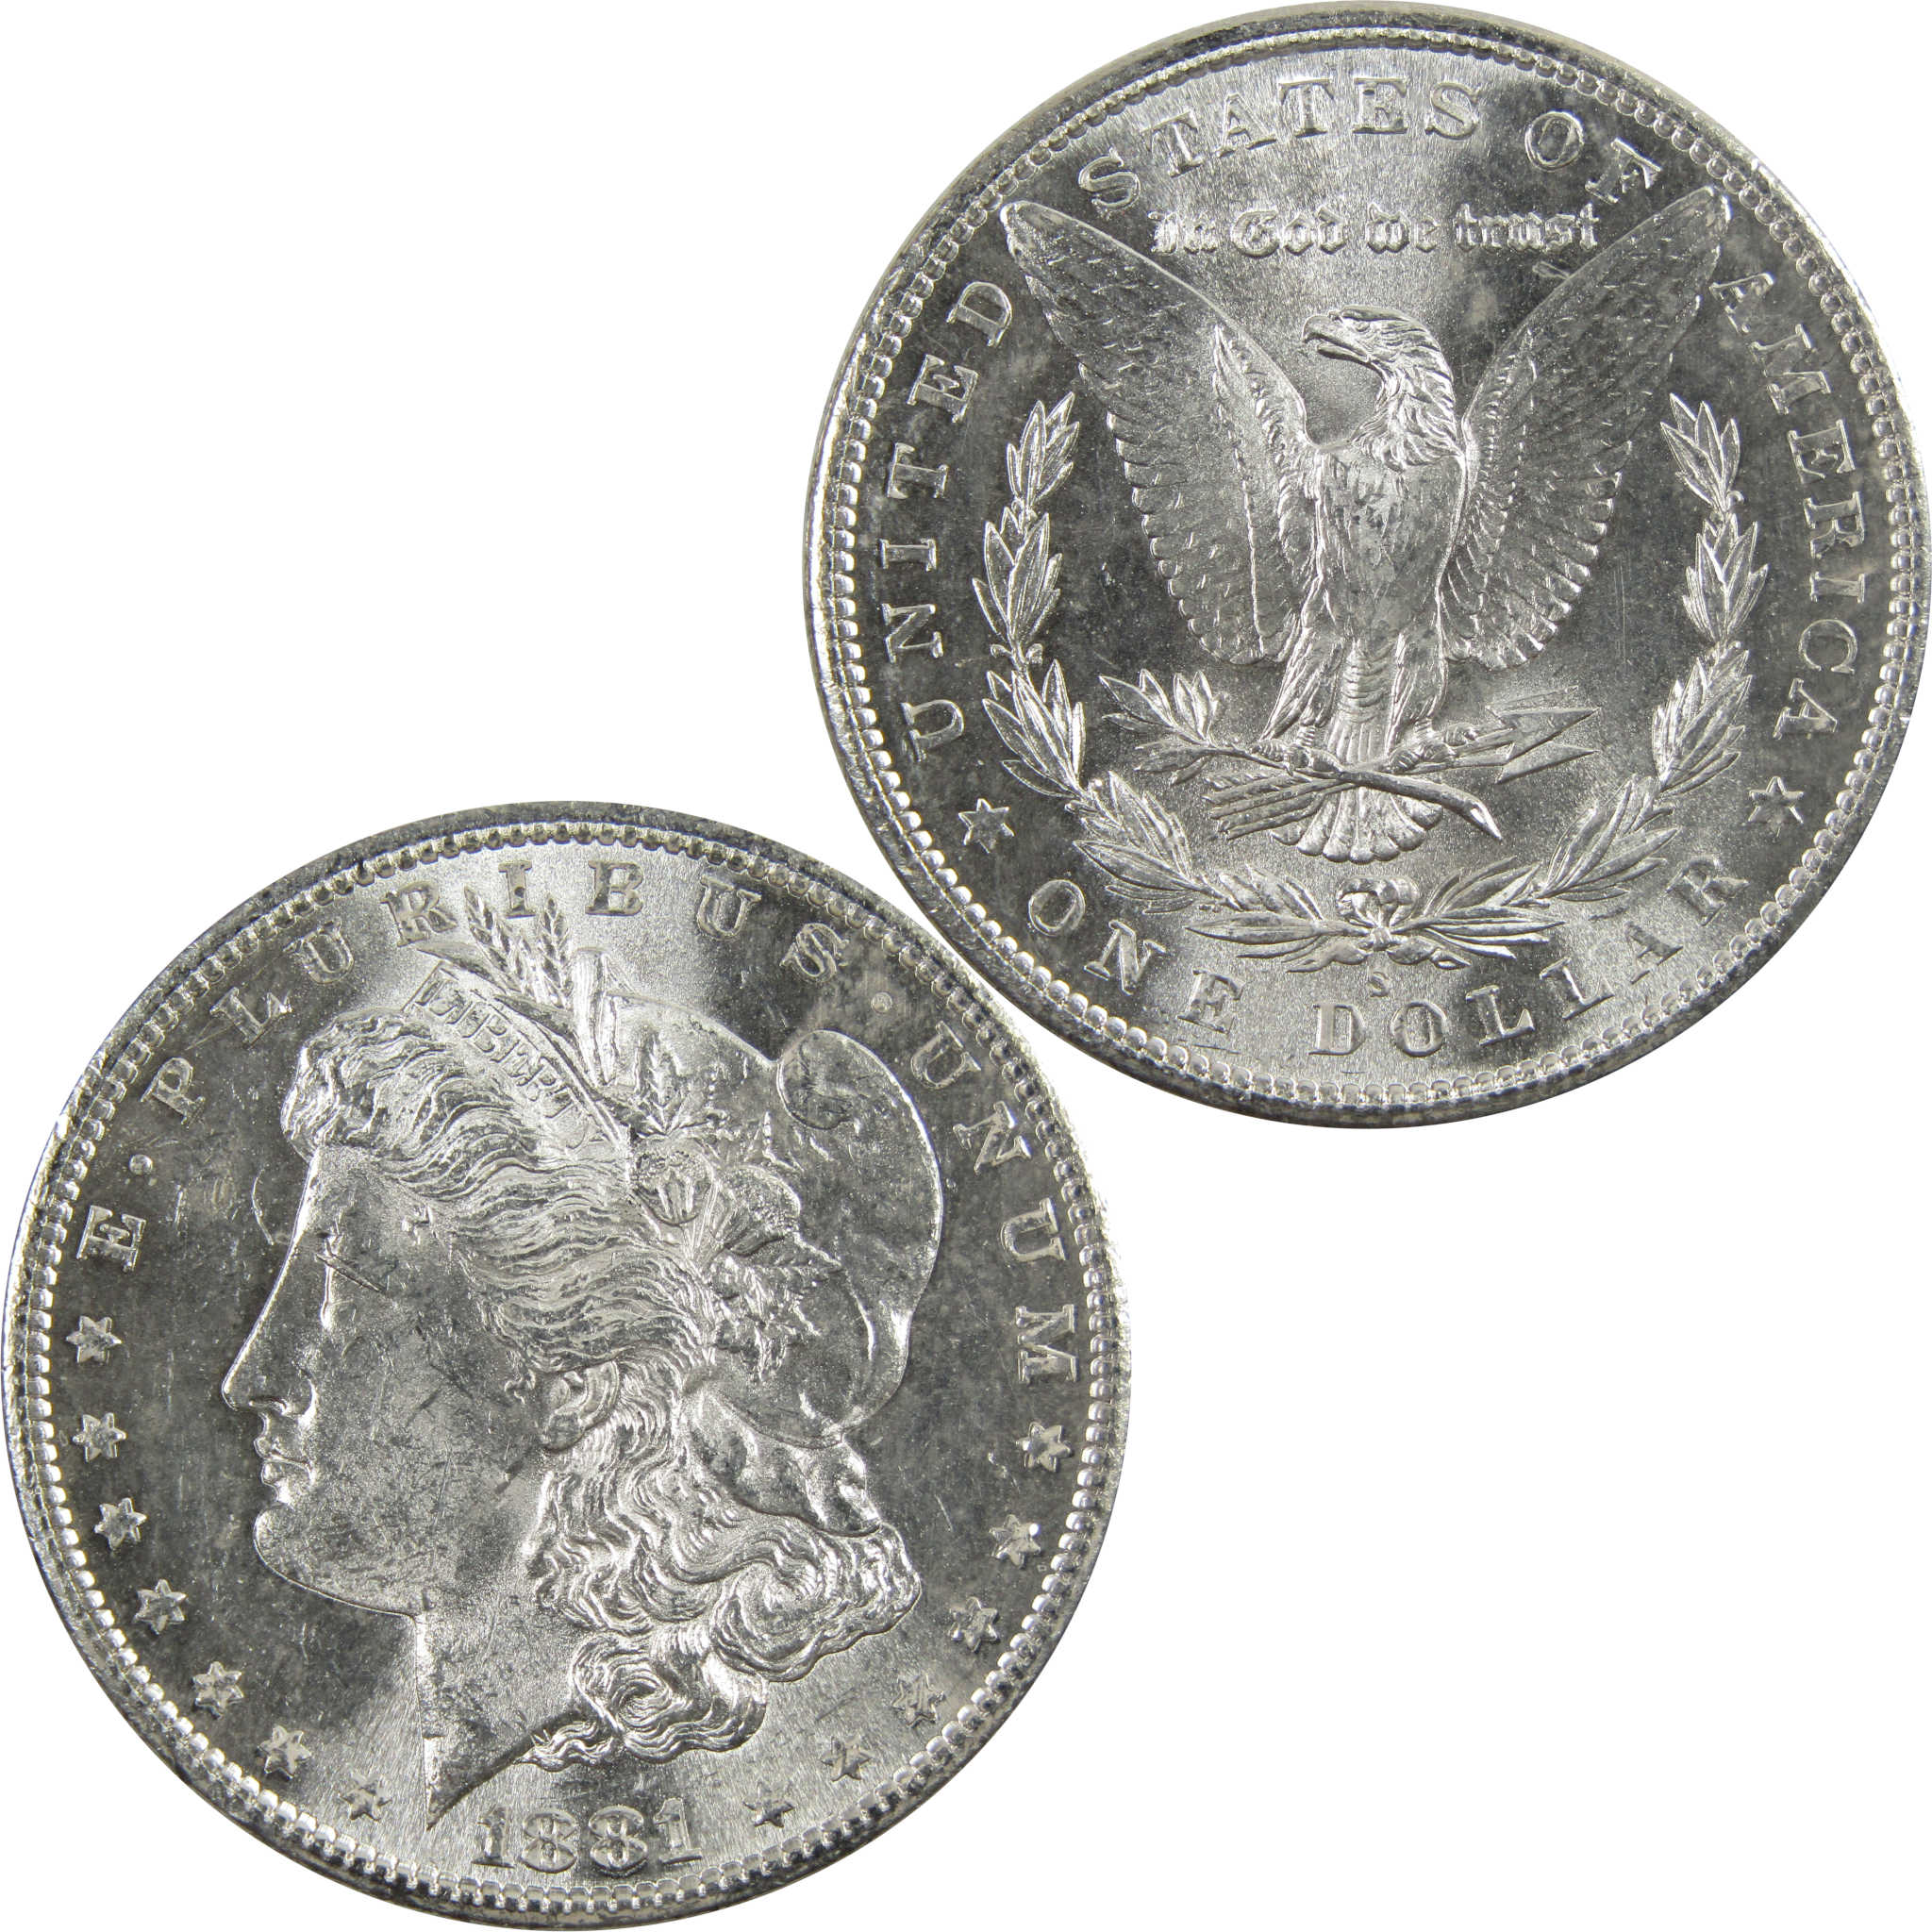 1881 S Morgan Dollar BU Uncirculated 90% Silver $1 Coin SKU:I5316 - Morgan coin - Morgan silver dollar - Morgan silver dollar for sale - Profile Coins &amp; Collectibles